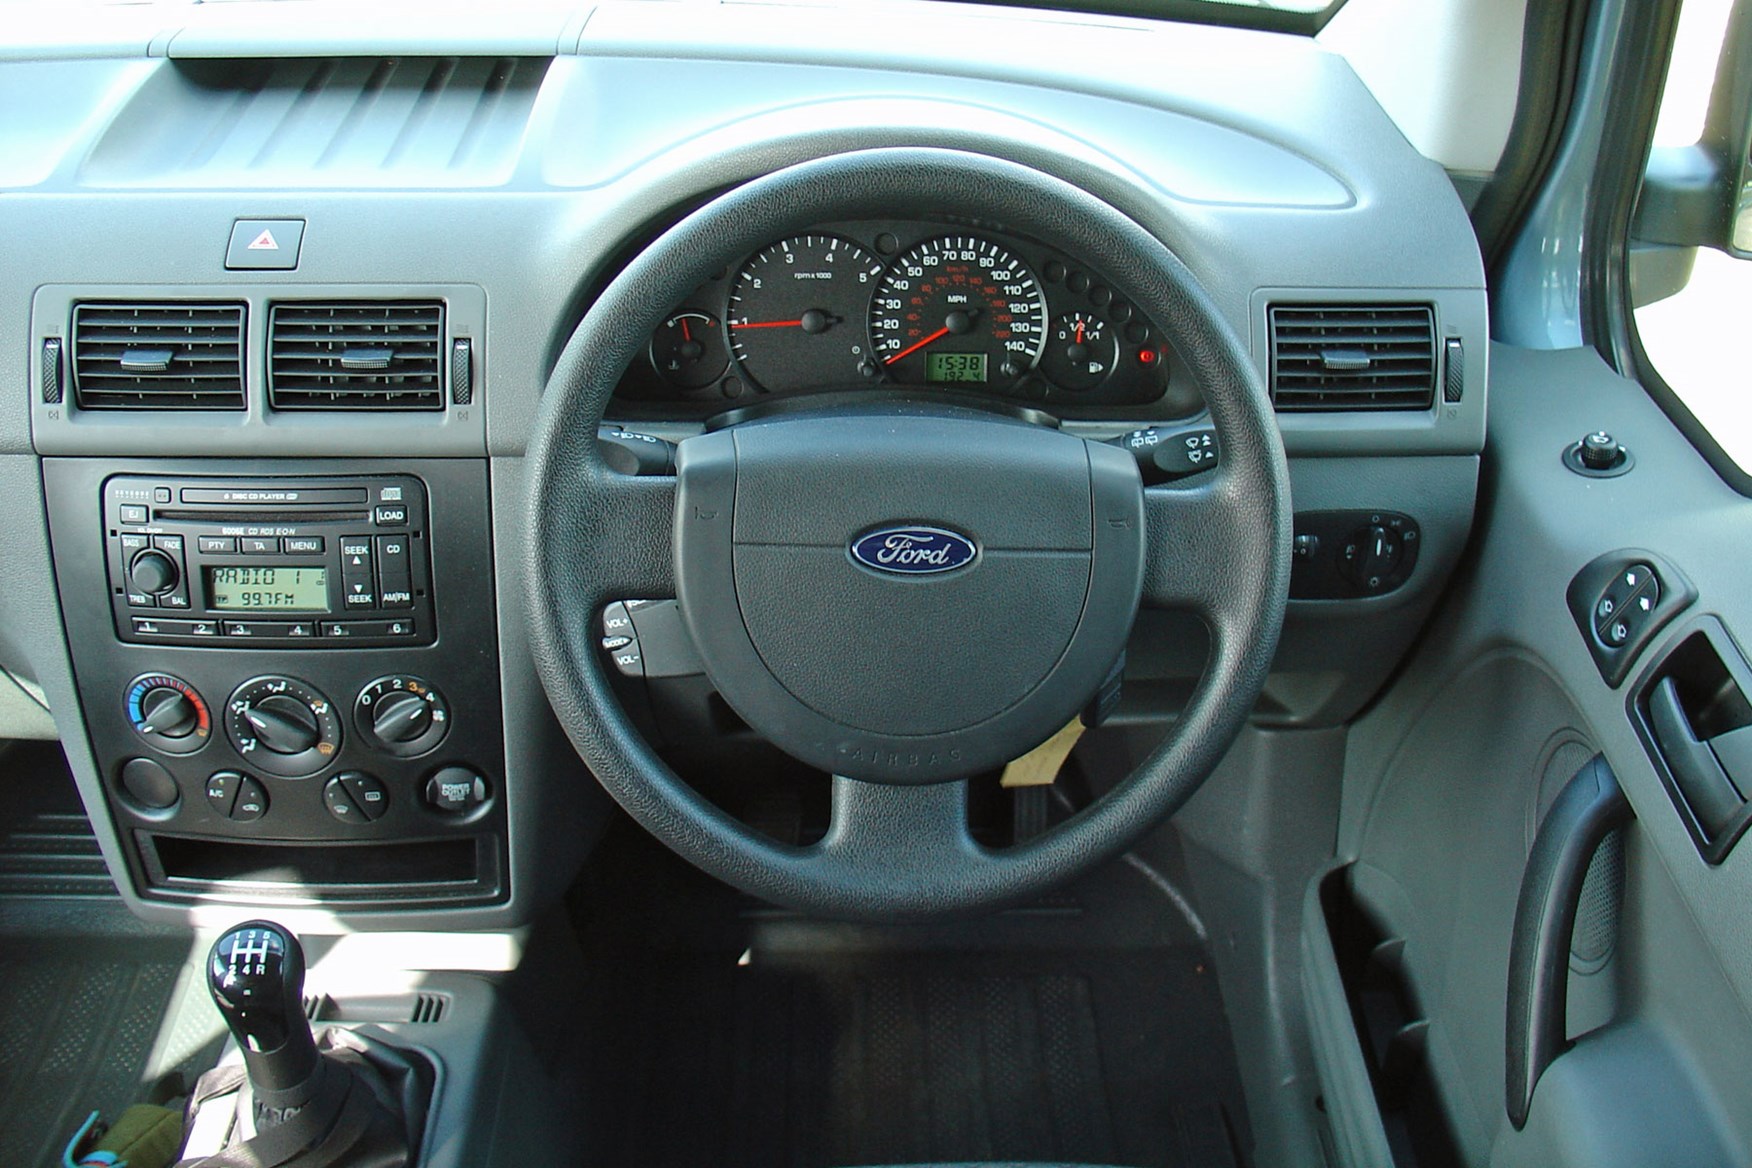 Ford Transit Connect (2002-2013) cab interior